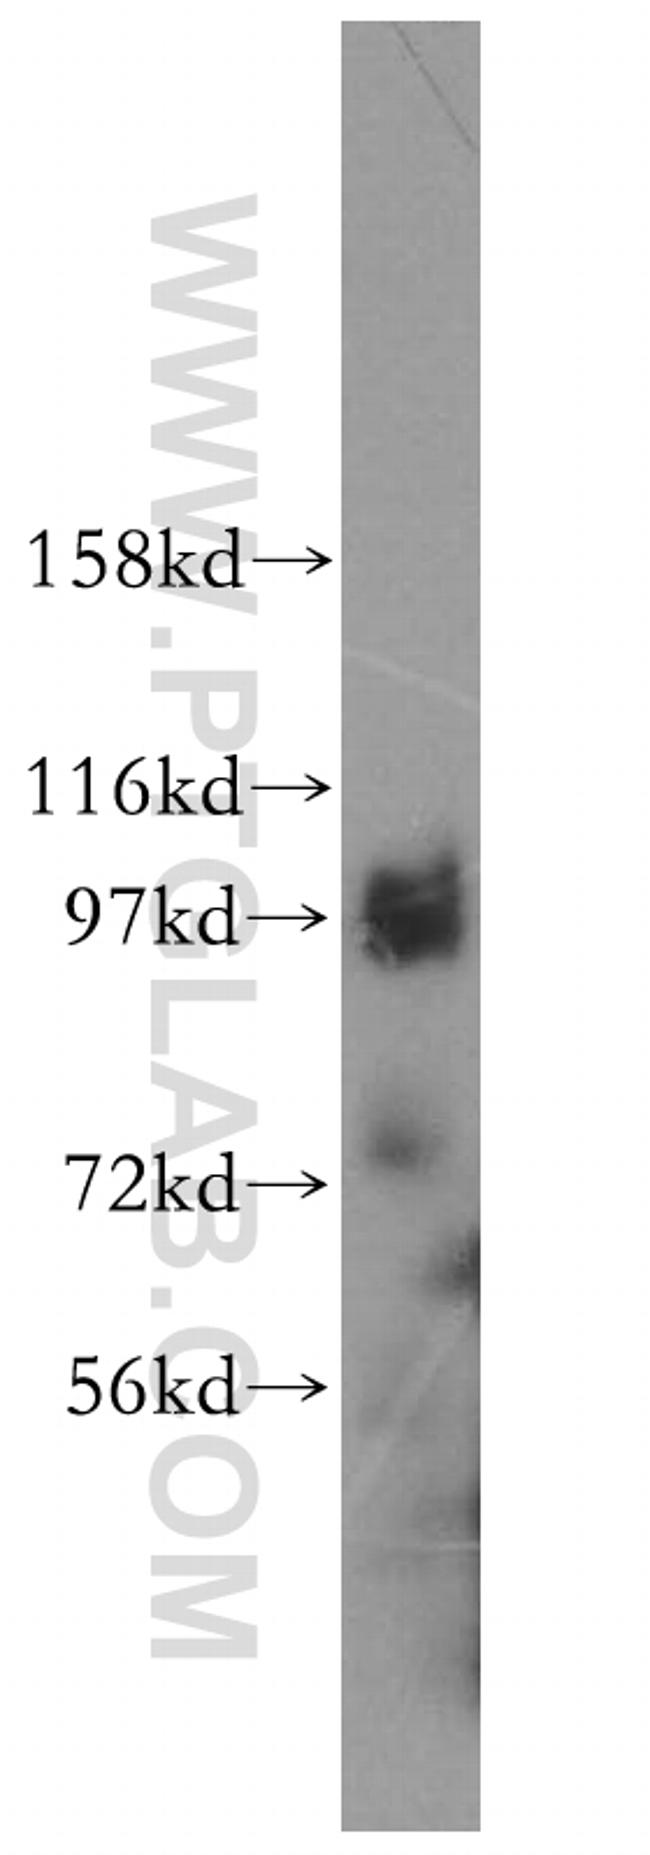 PRKD2 Antibody in Western Blot (WB)